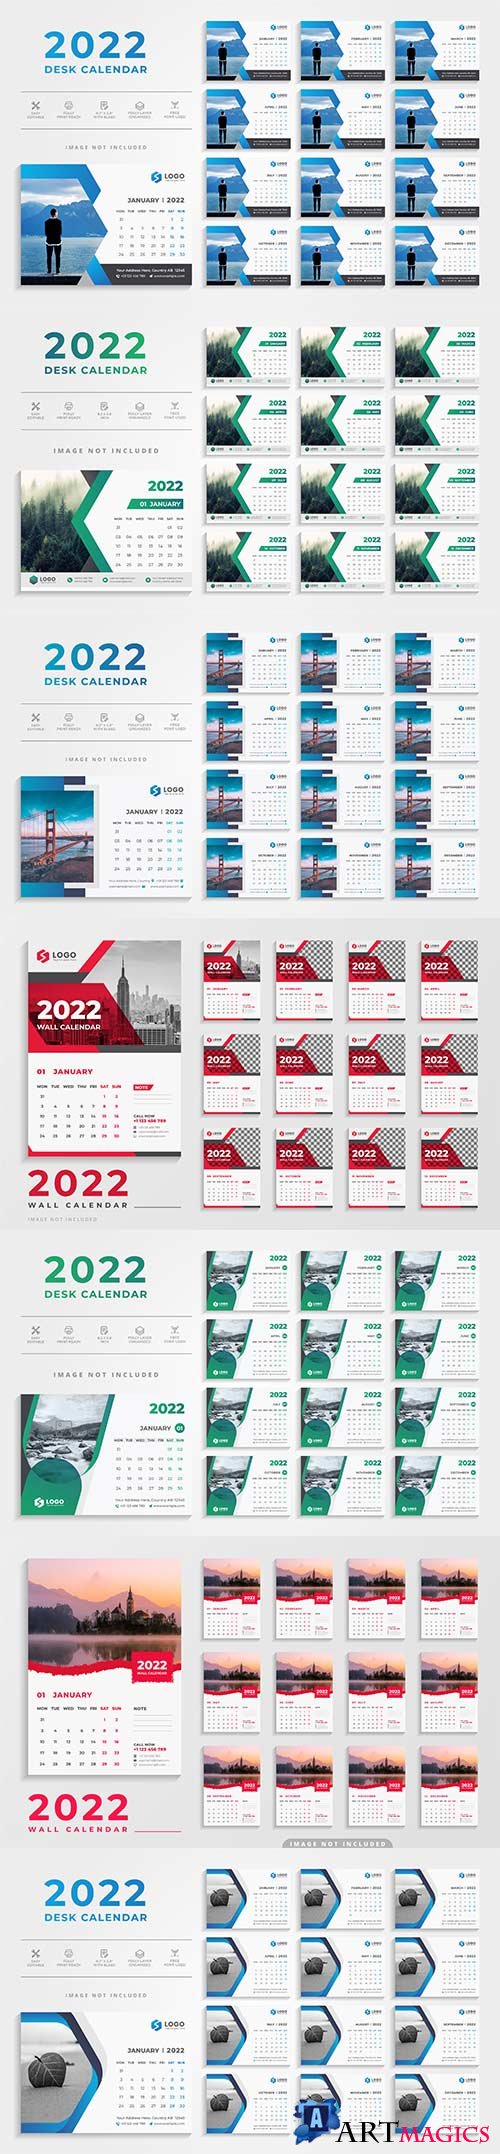 2022 desk calendar template premium vector